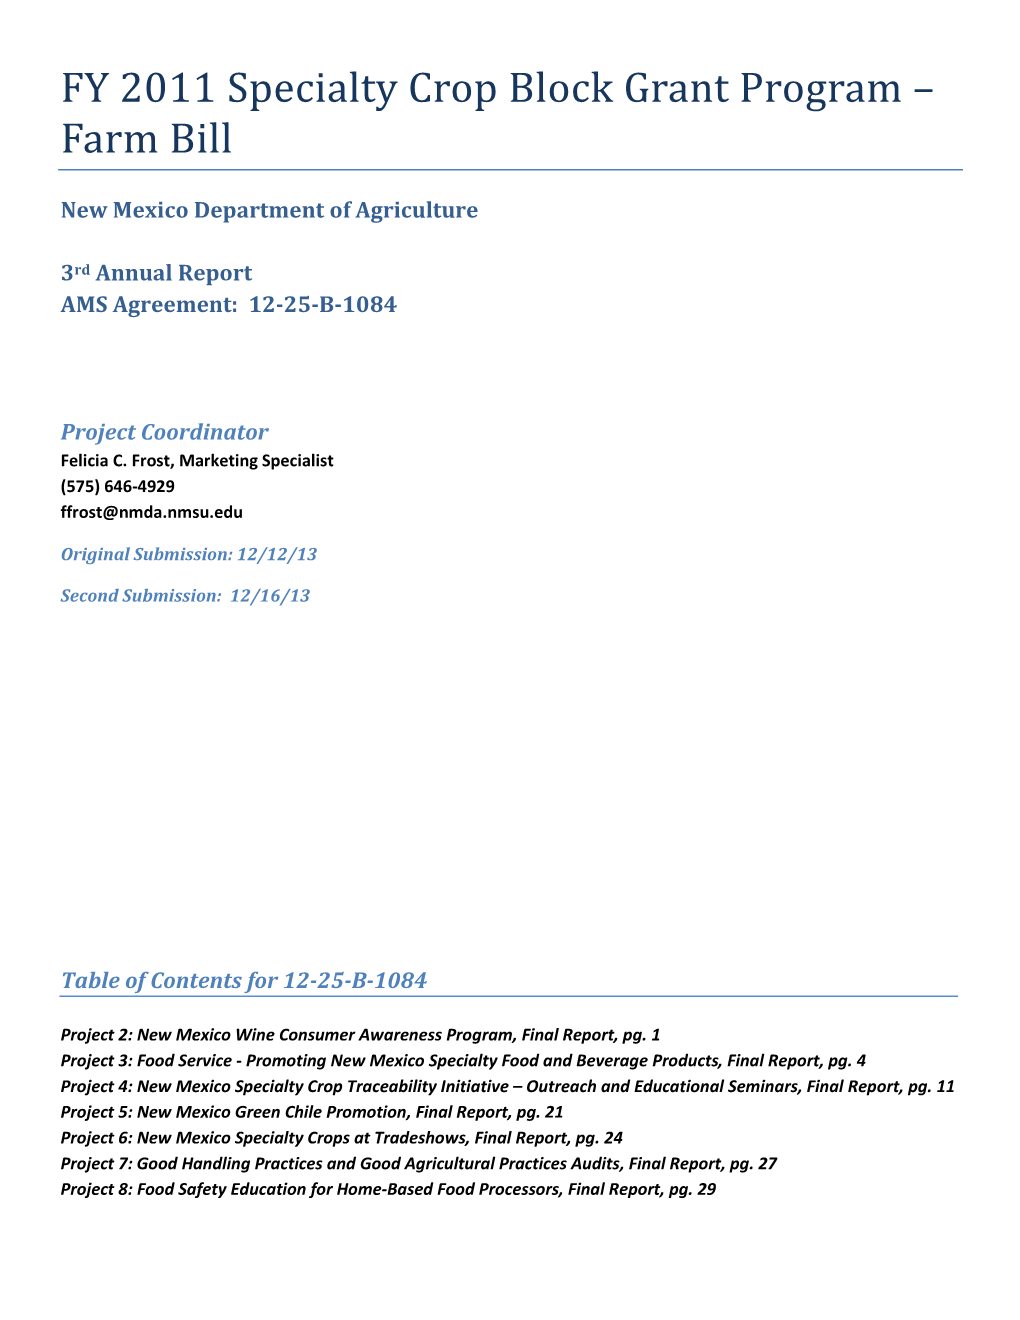 FY 2011 Specialty Crop Block Grant Program – Farm Bill